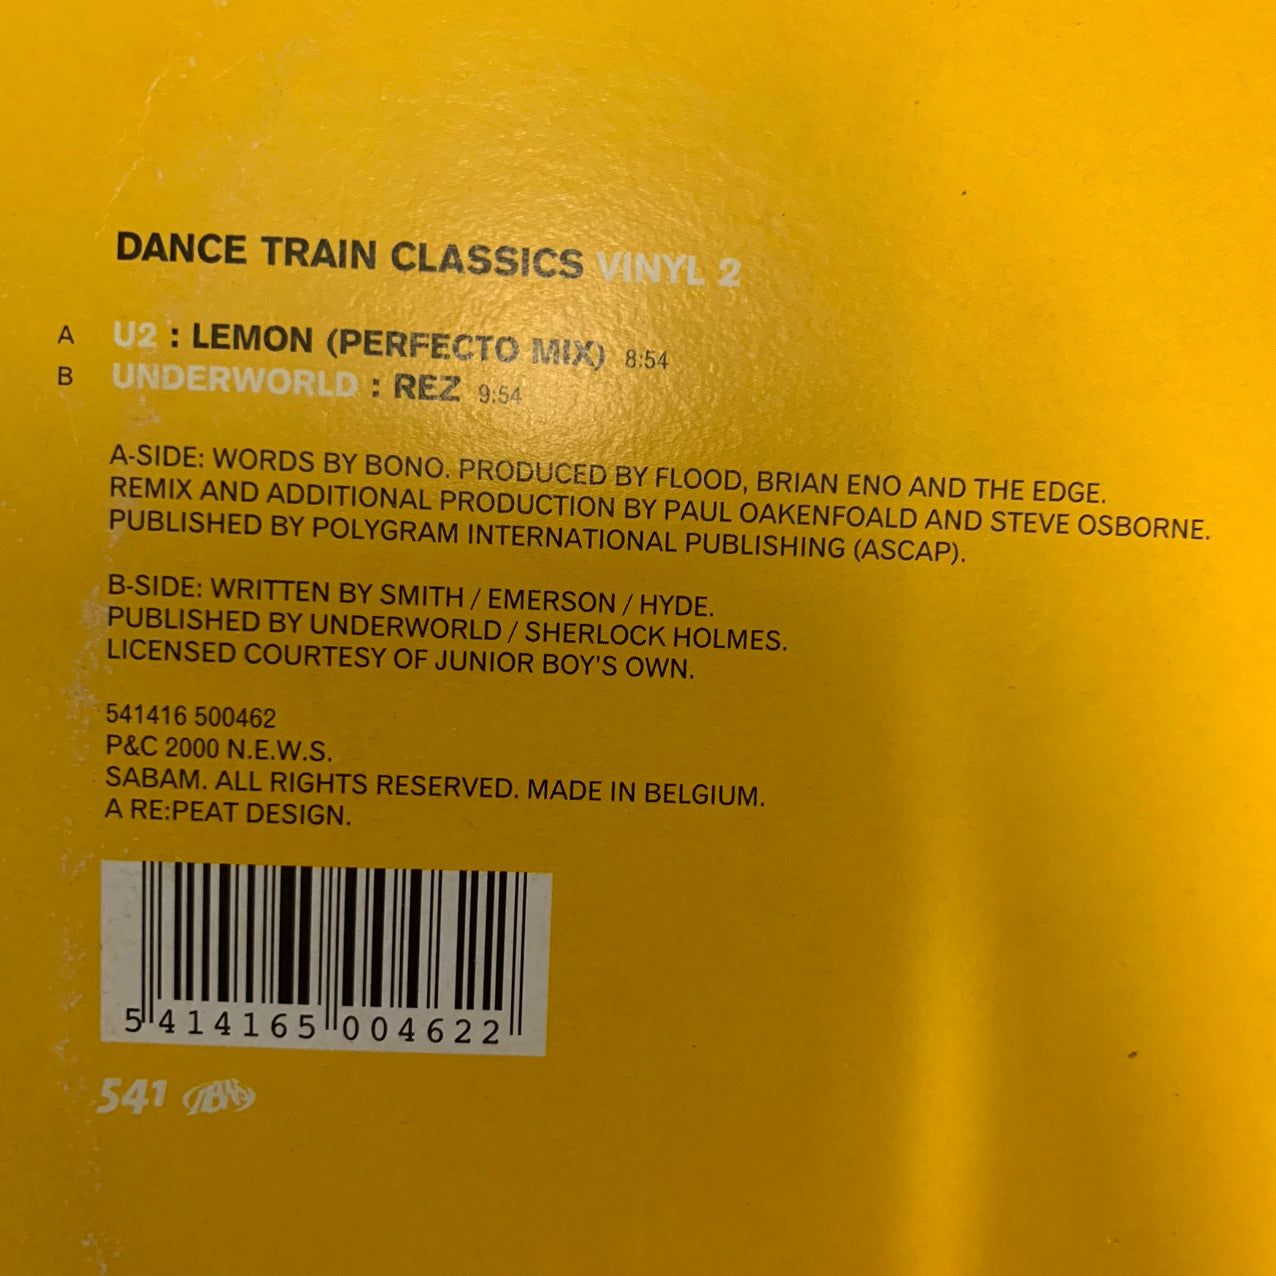 Dance Train Classics Vol 2 U2 “Lemon” / Underworld “Rez” 2 Track 12inch Vinyl